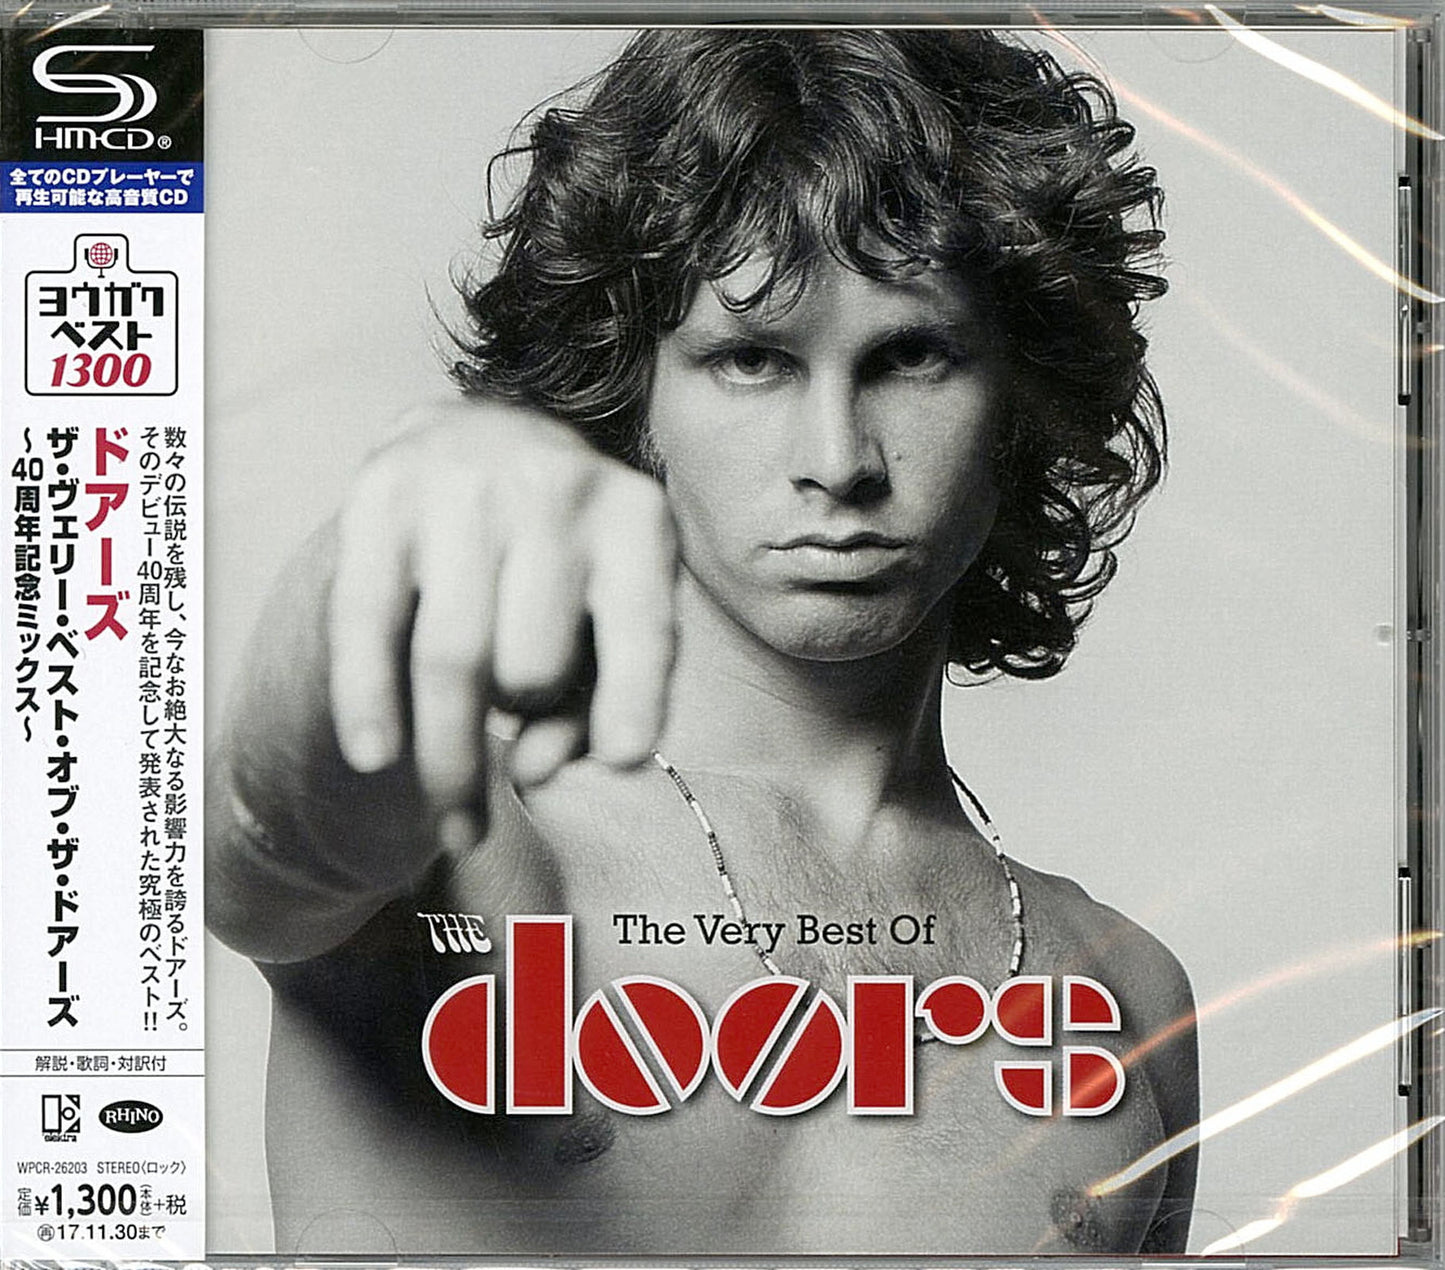 The Doors - The Very Best Of The Doors - Japan  SHM-CD